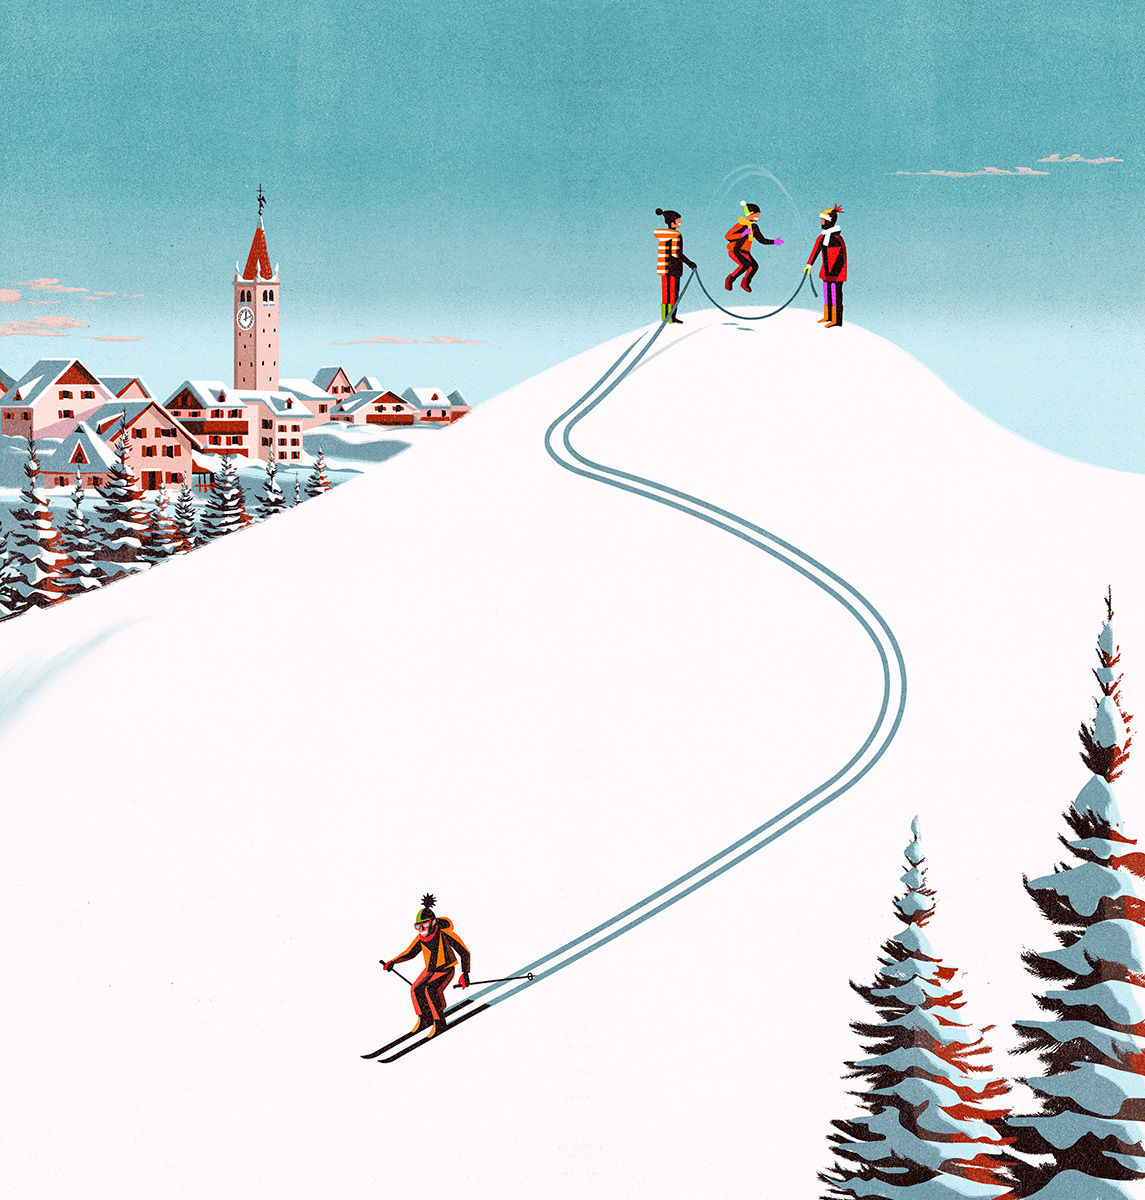 January illustration: Brentonico (Trentino-Alto Adige/Südtirol)